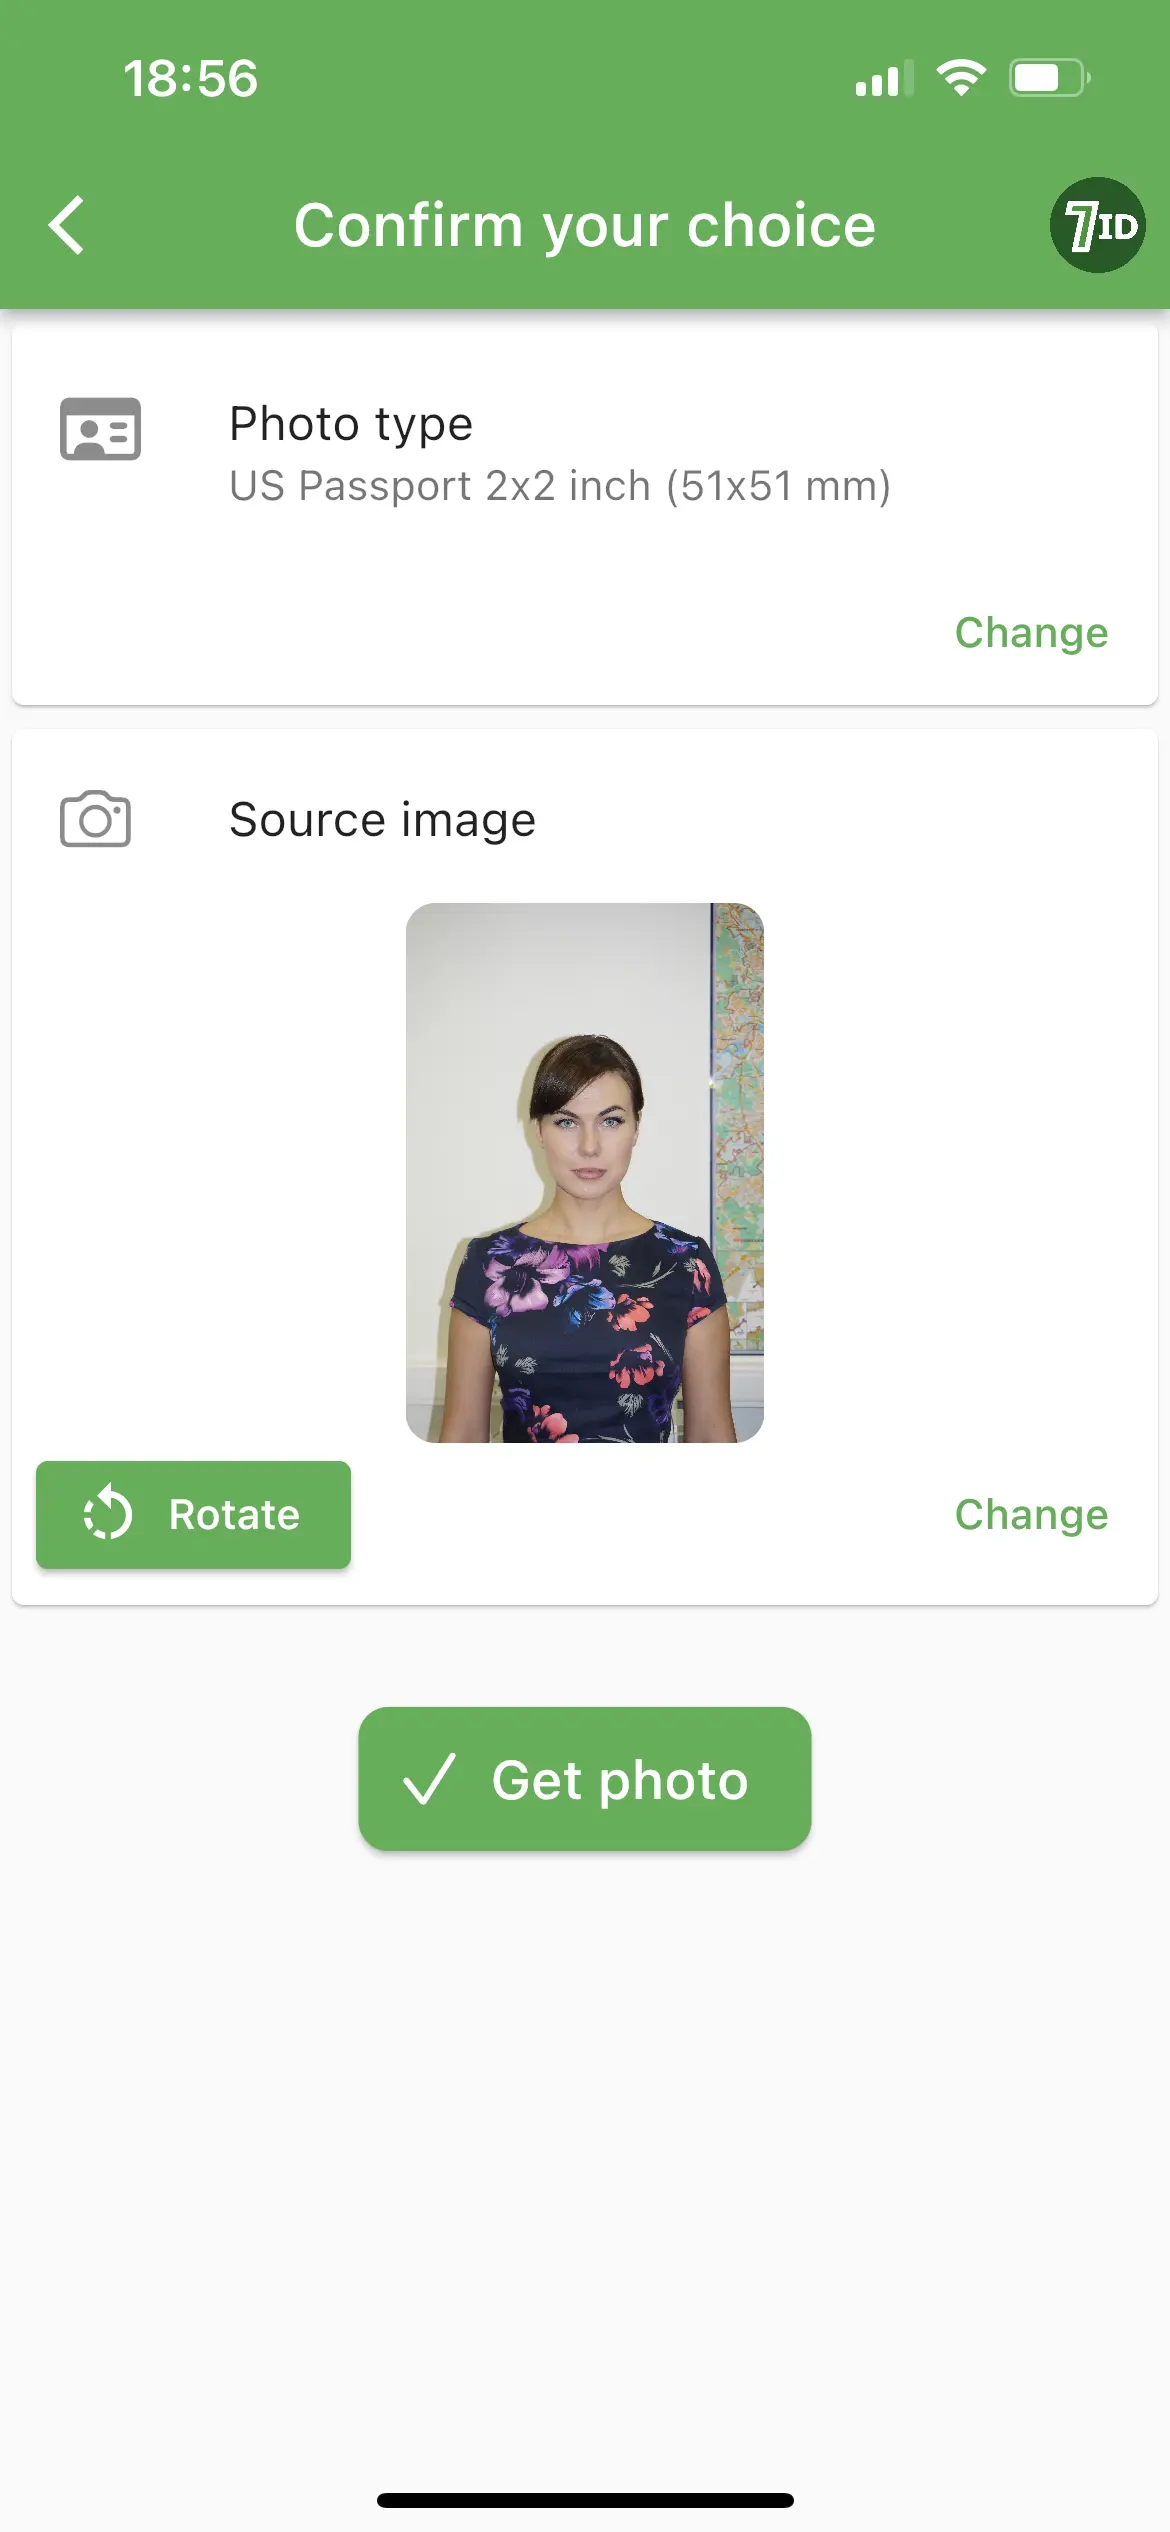 7ID App: USA Passport Photo Editing Tool